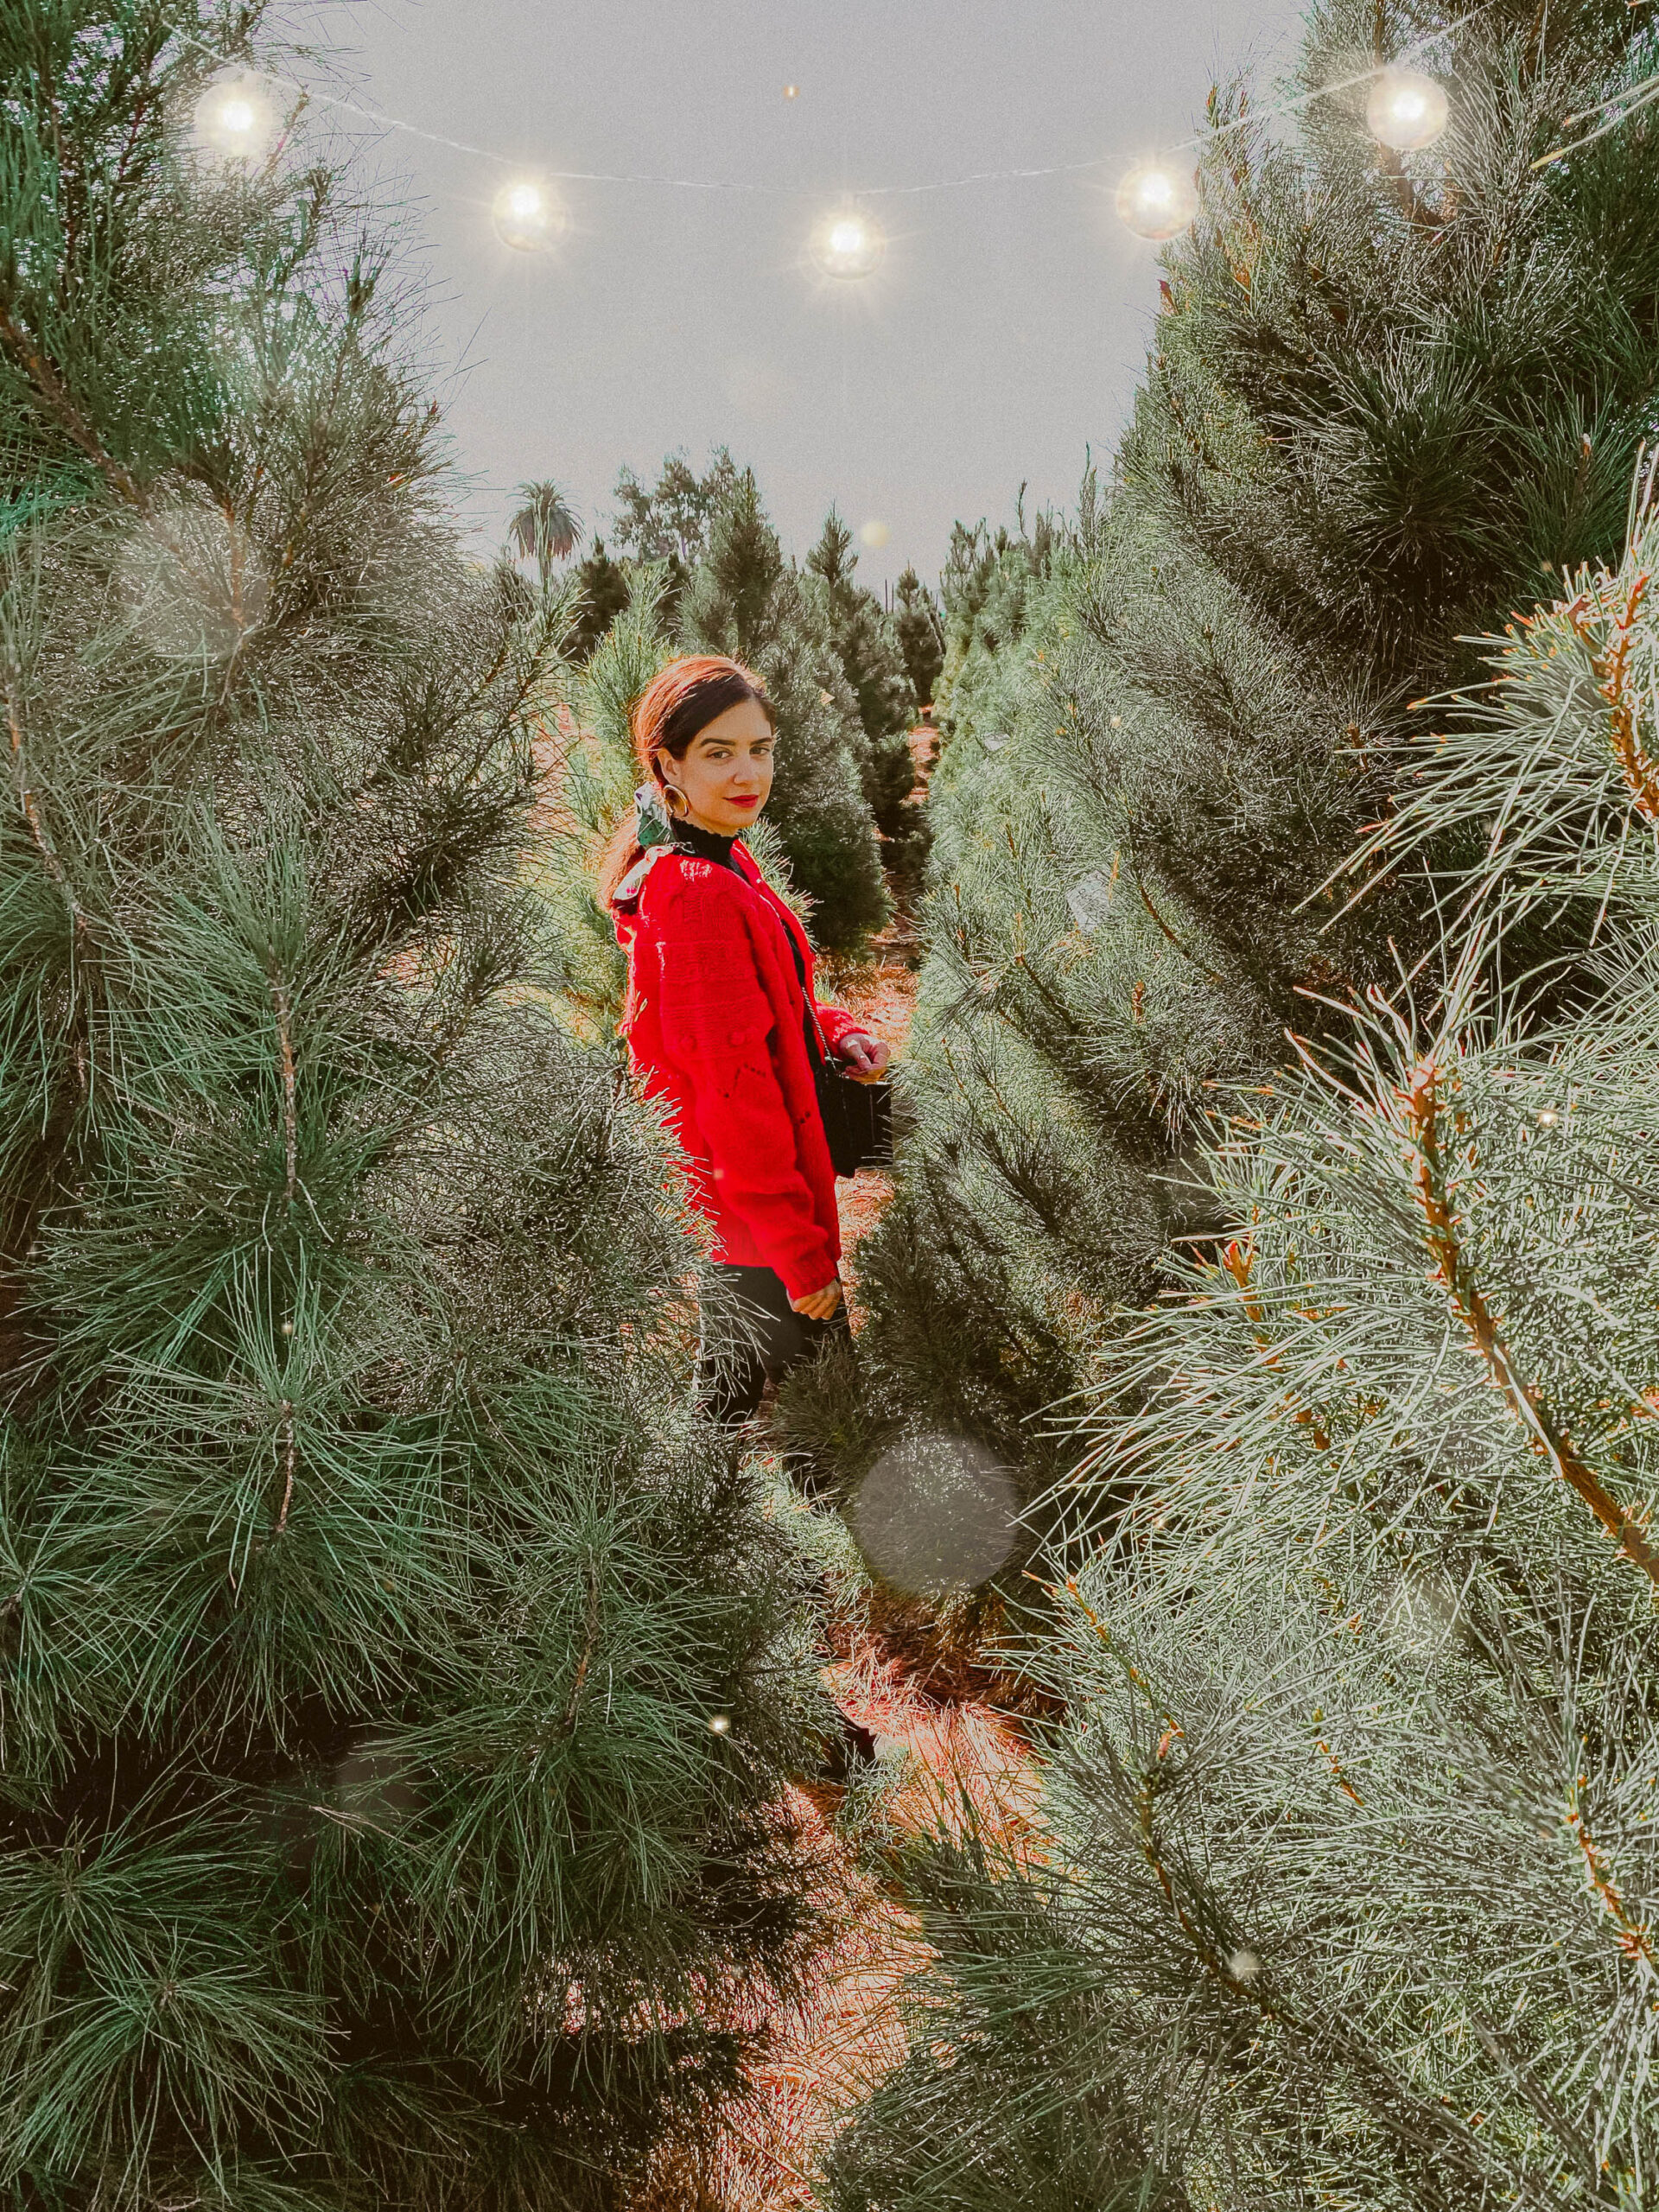 Christmas Tree Farm Photoshoot woman wearing red sweater - 5 Creative Christmas Photoshoot Ideas to Try This Season